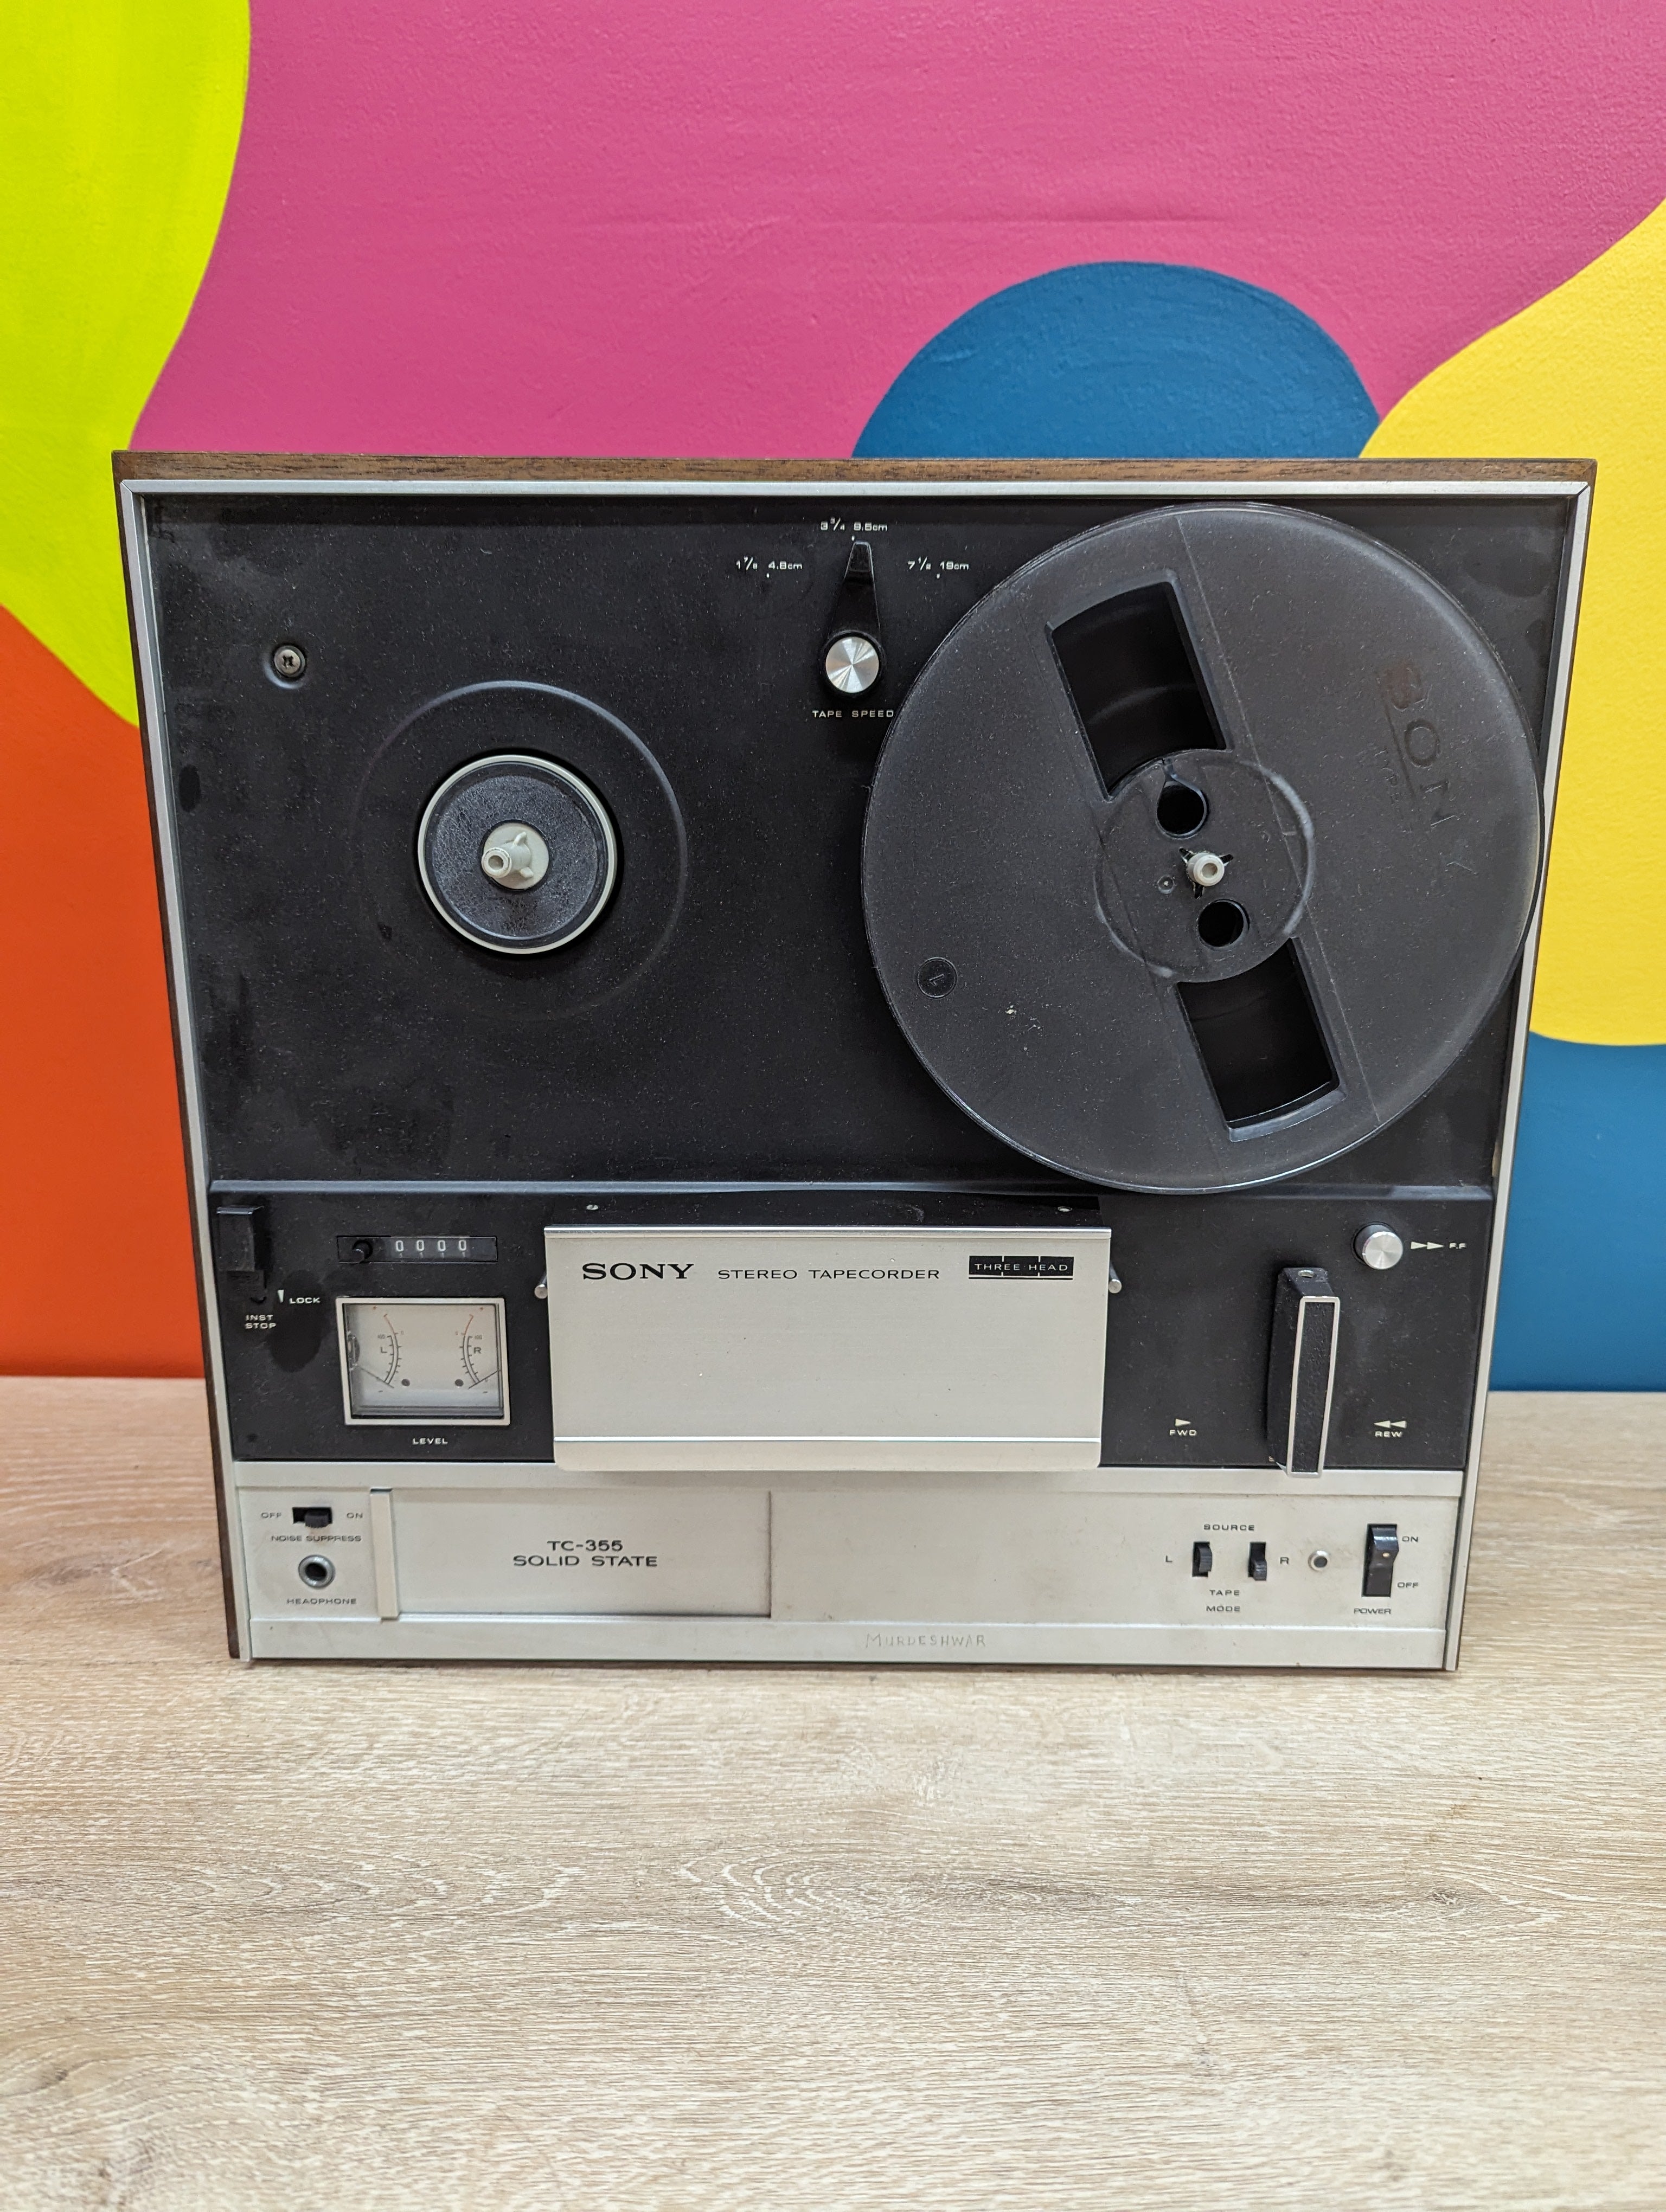 SONY TC-355 Tape Recorder